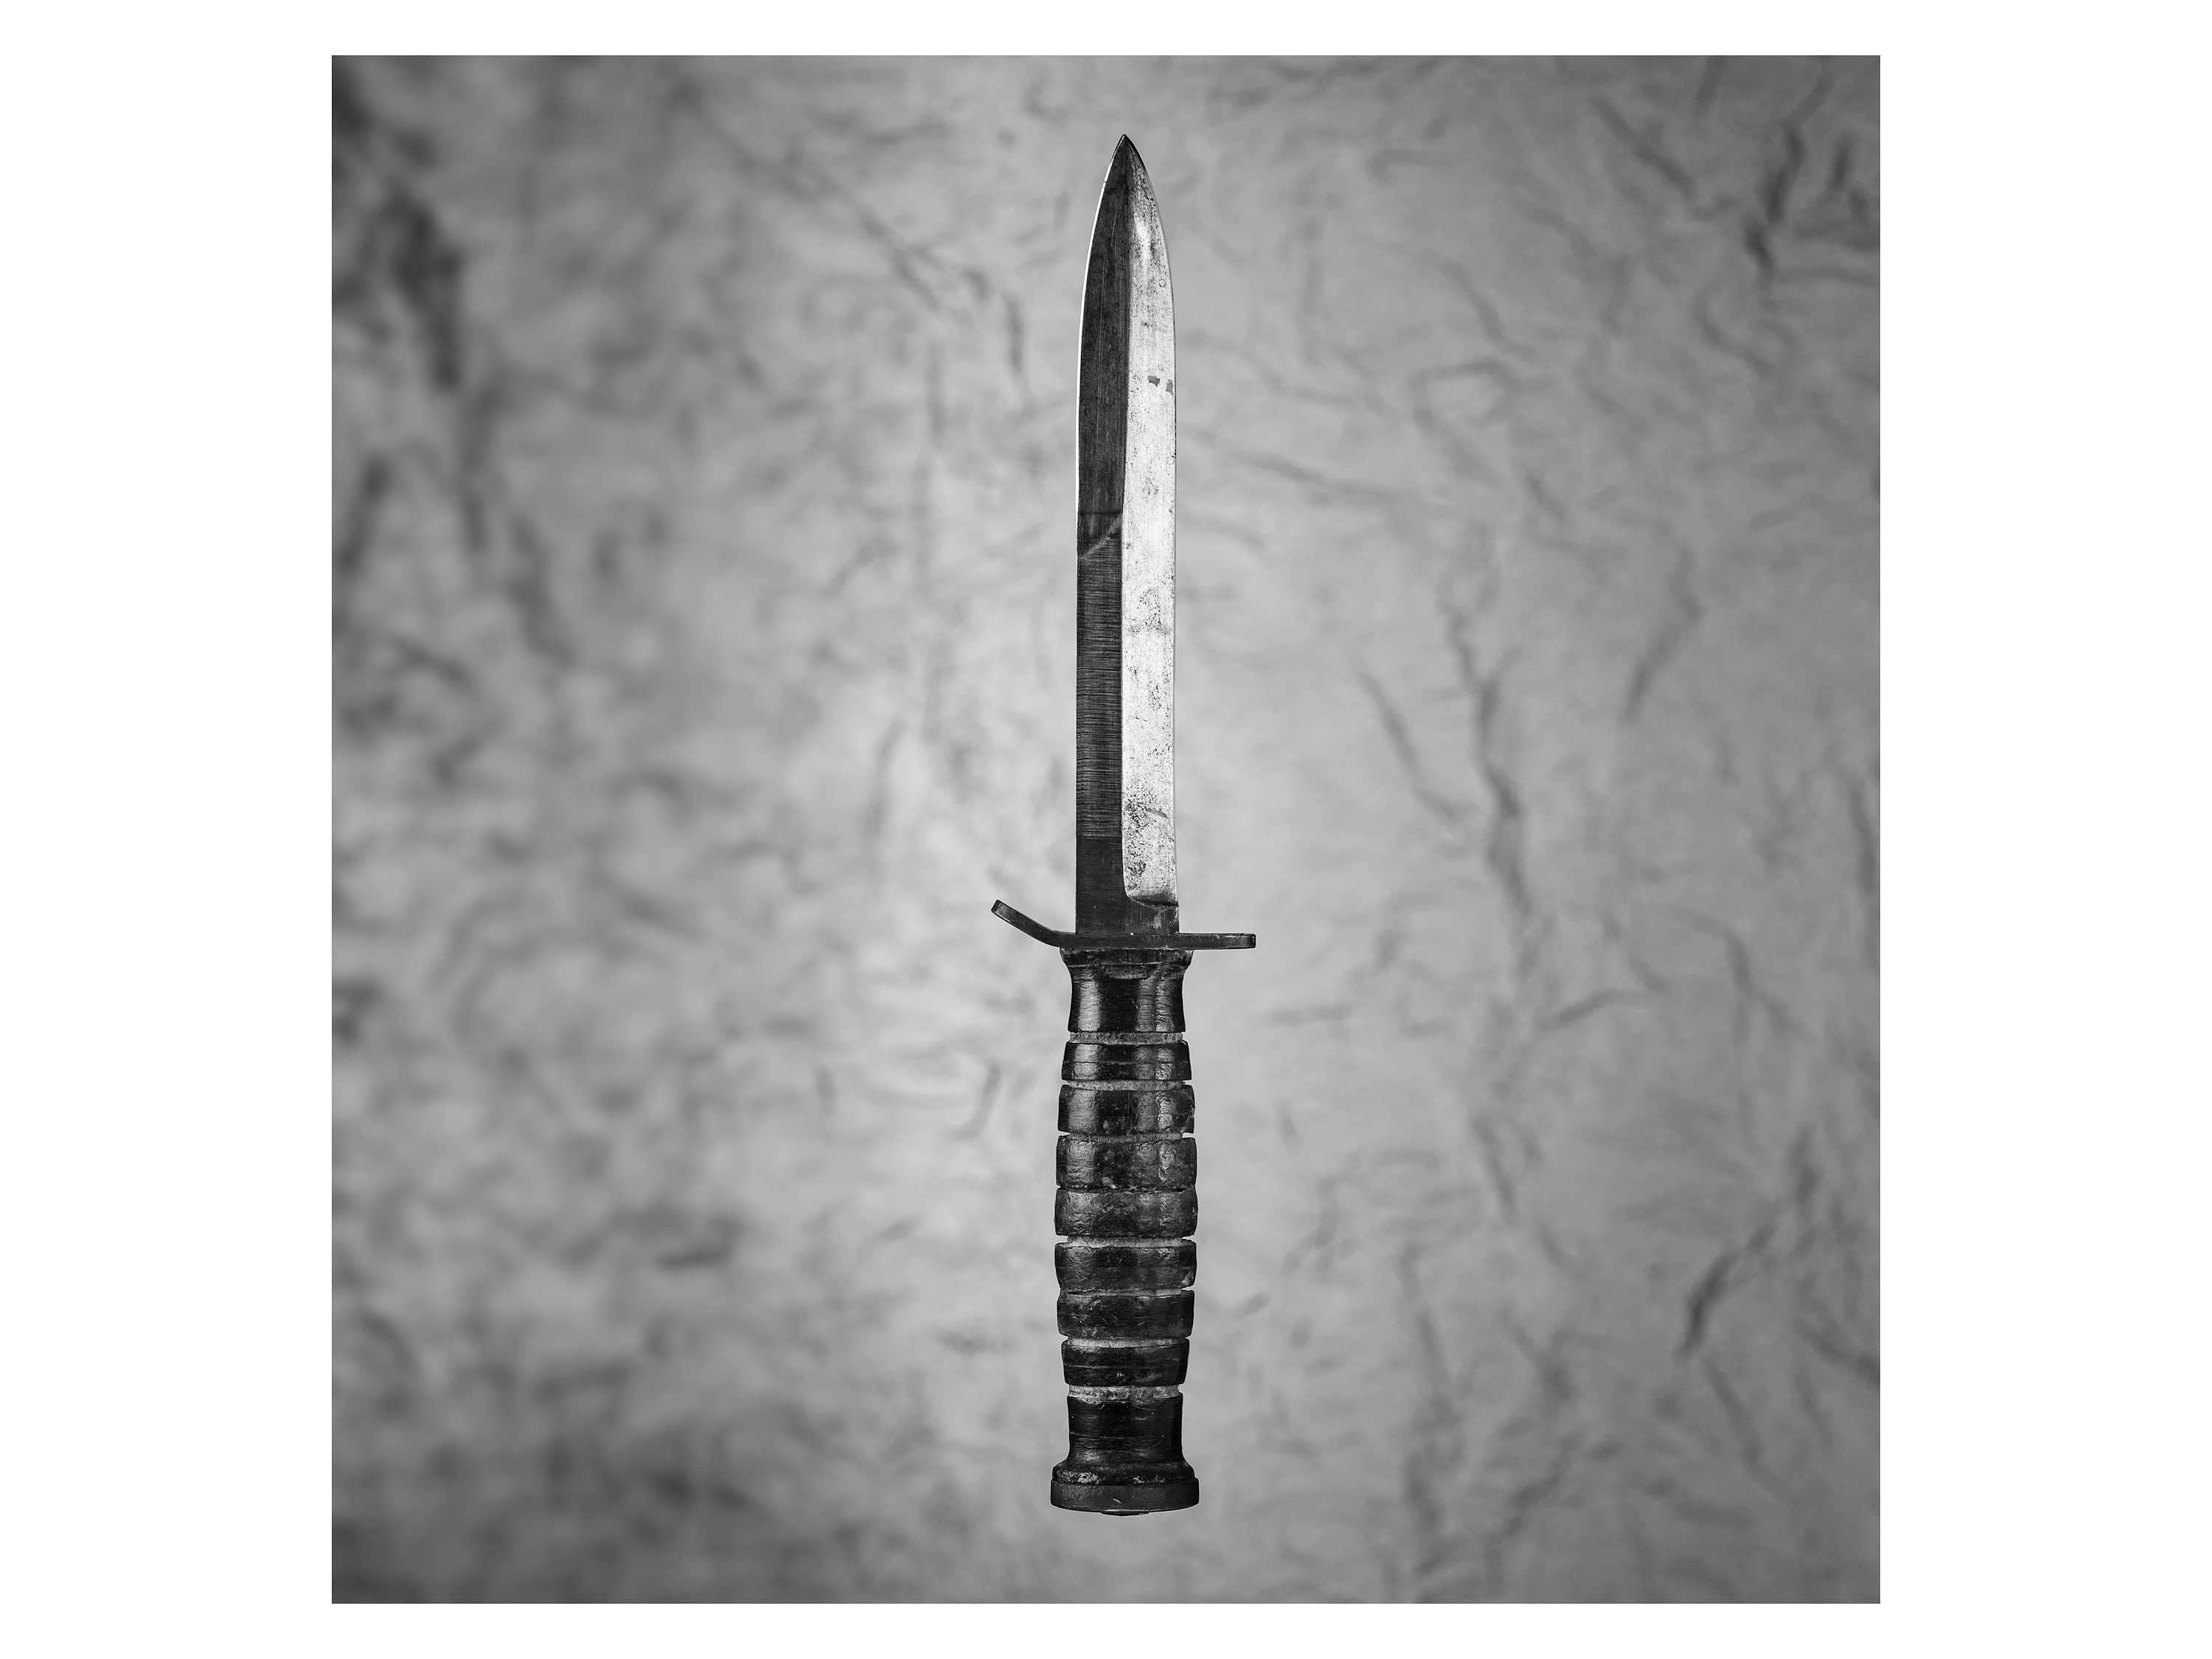 US M3 PARA WWII KNIFE LEG STRAP SANGLE JAMBE HAWKINS POIGNARD DDAY 44